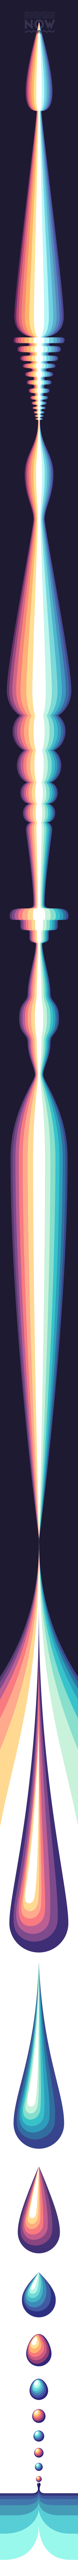 super long rainbow laser beam colorgasm scrolling image by nina-geometrieva